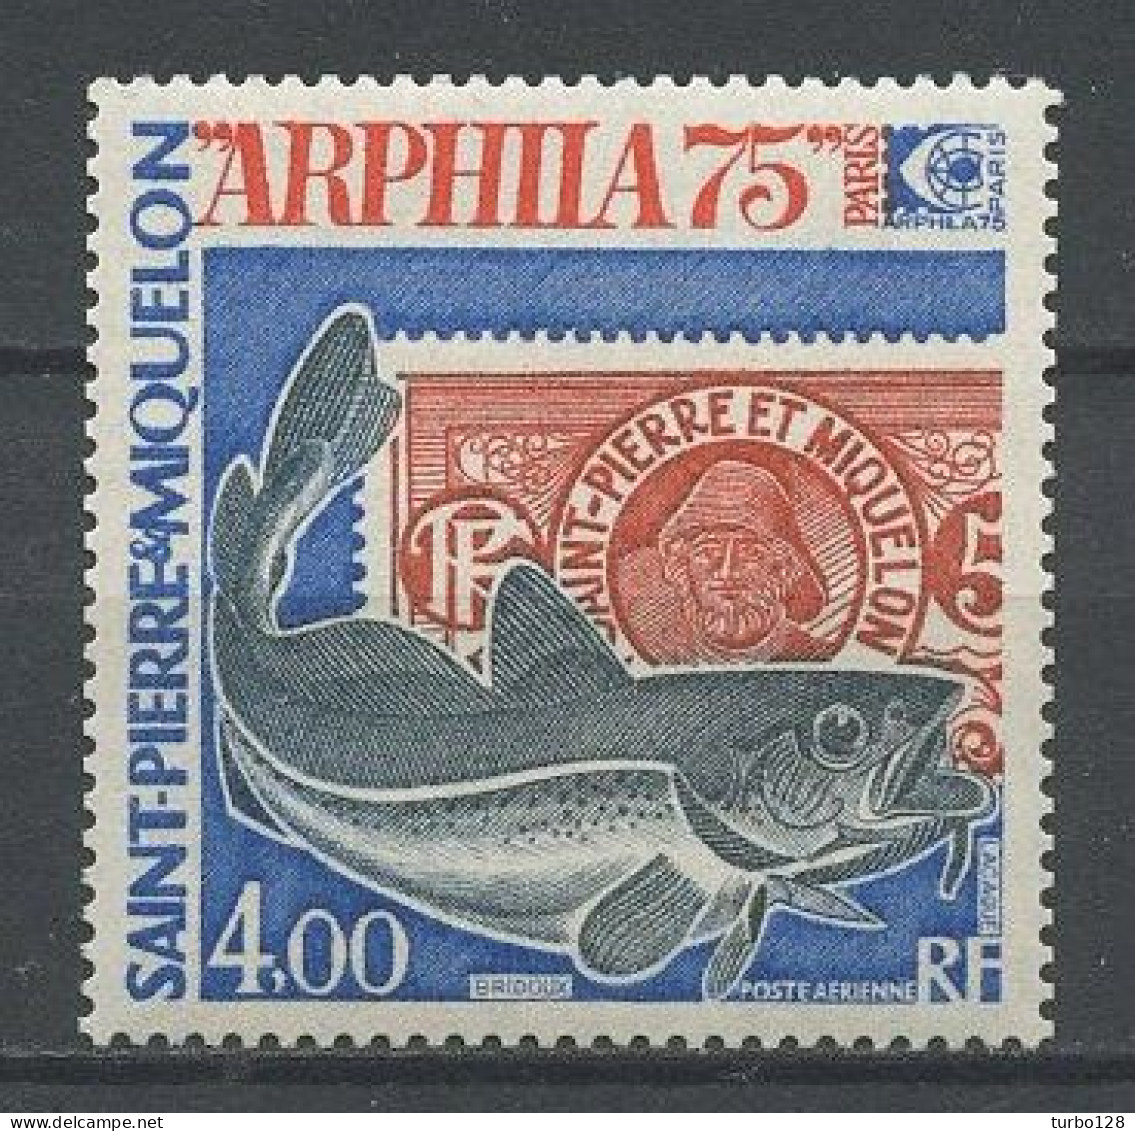 SPM MIQUELON 1975 PA N° 60 ** Neuf MNH Superbe C 25,20 € ARPHILA 75 Poissons Fishes Animaux Exposition Philatélique - Nuovi